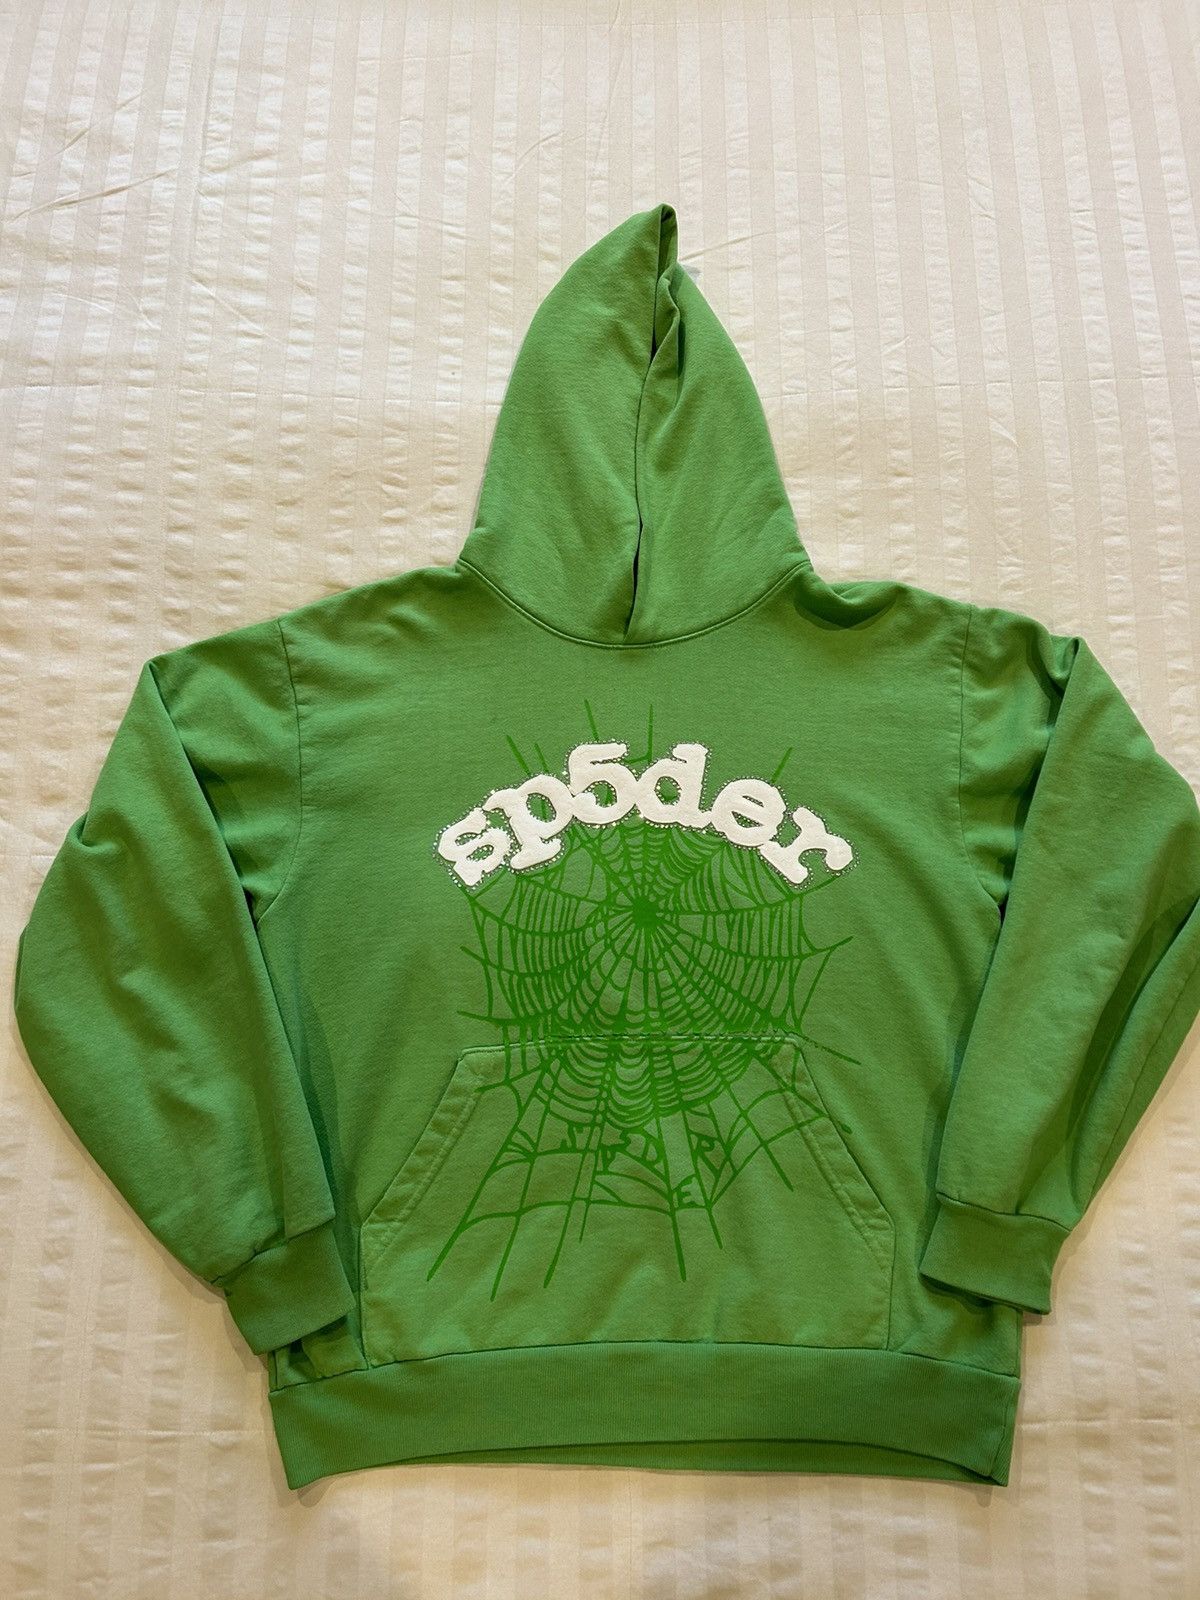 Spider Worldwide Sp5der slime green web hoodie | Grailed